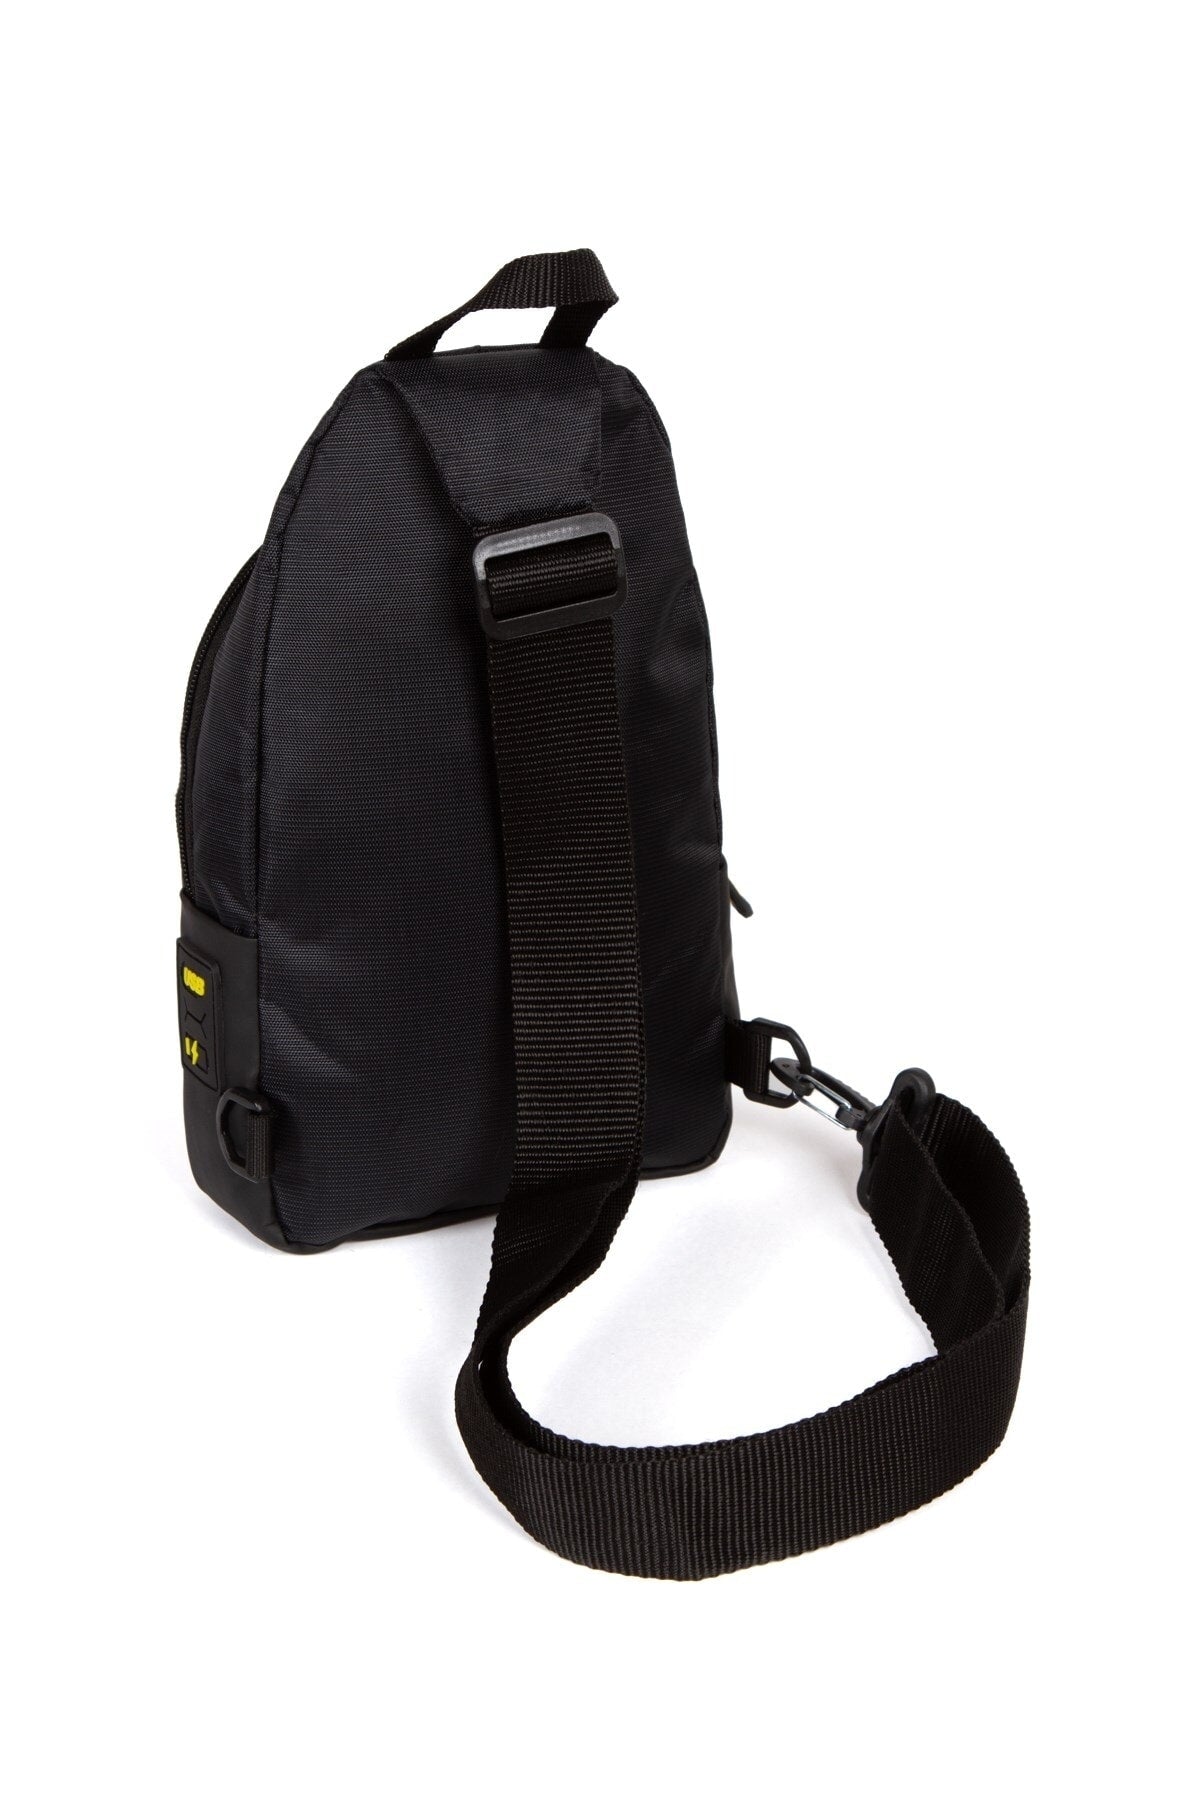 Unisex Imperteks Cross Shoulder And Waist Bag Suitable For Travel And Sports Use